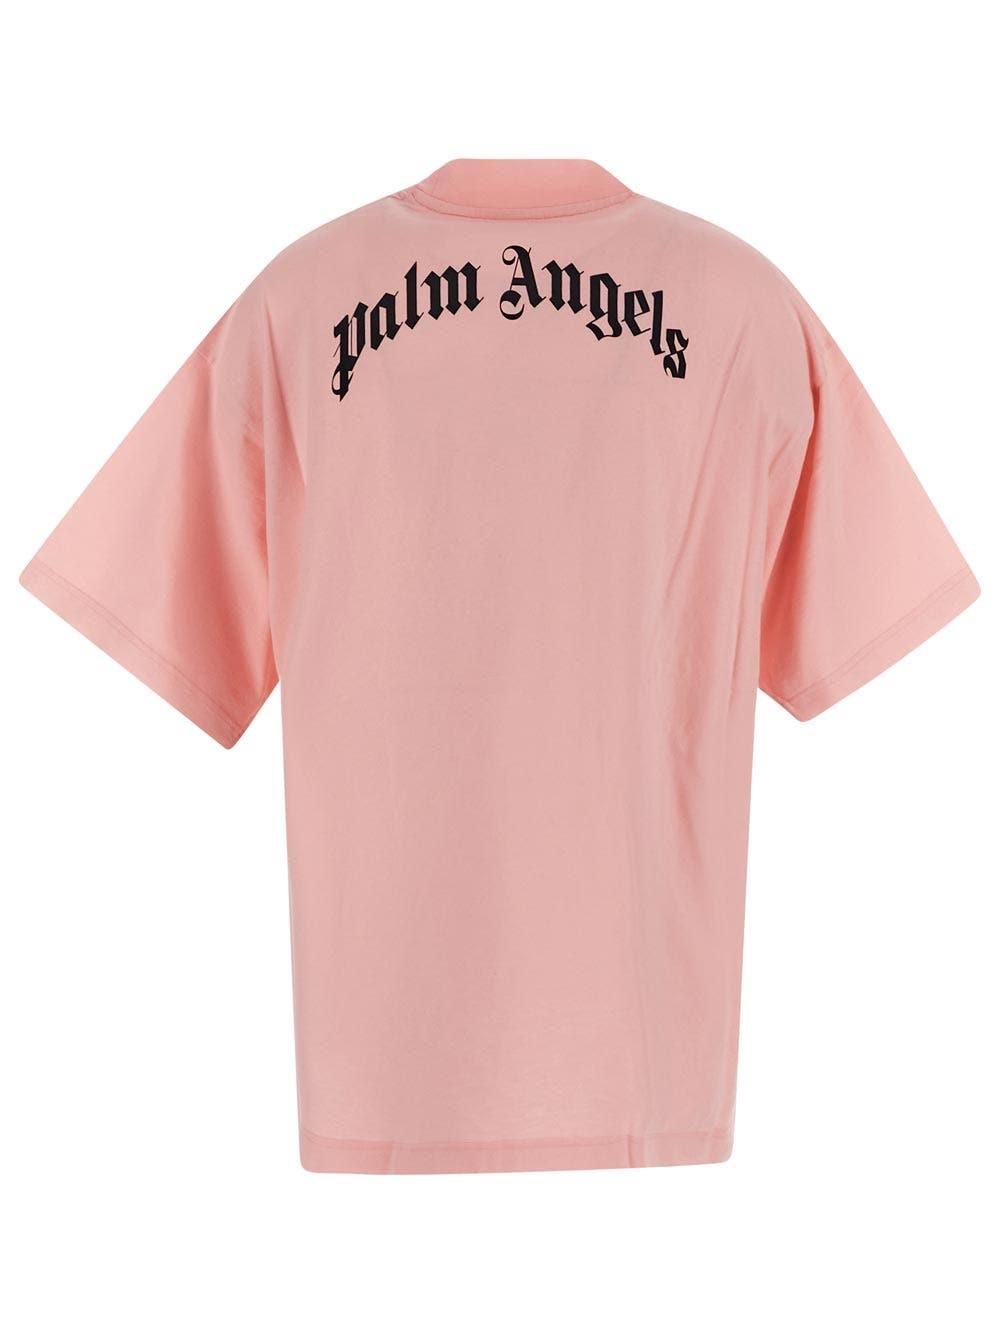 PALM ANGELS logo tee /loose t-shirt/ 